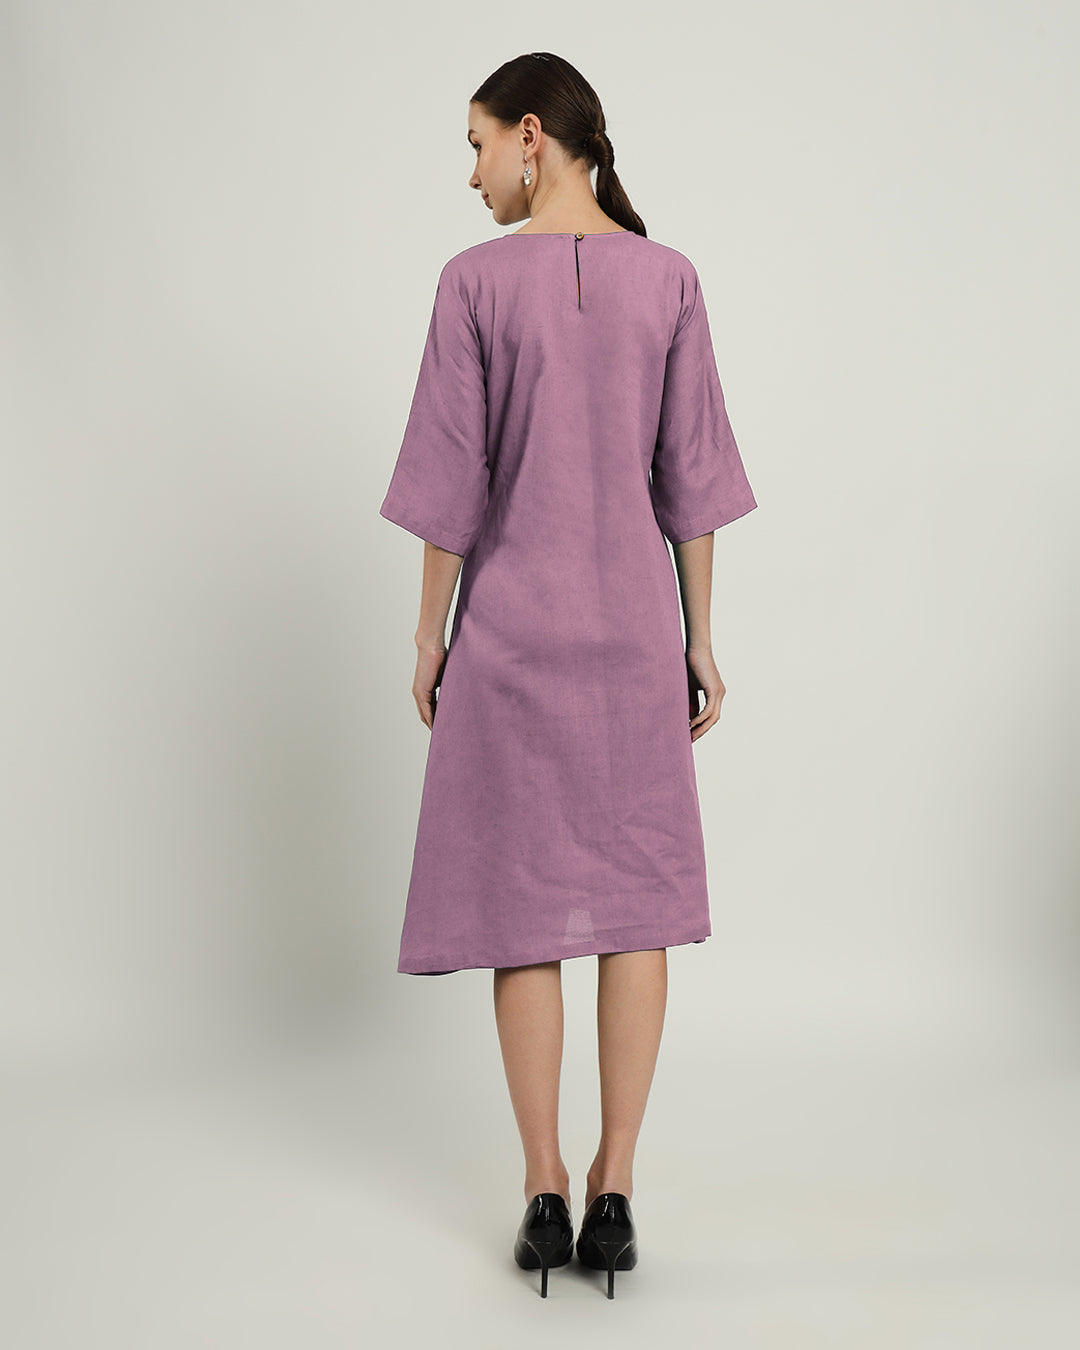 The Monrovia Purple Swirl Dress